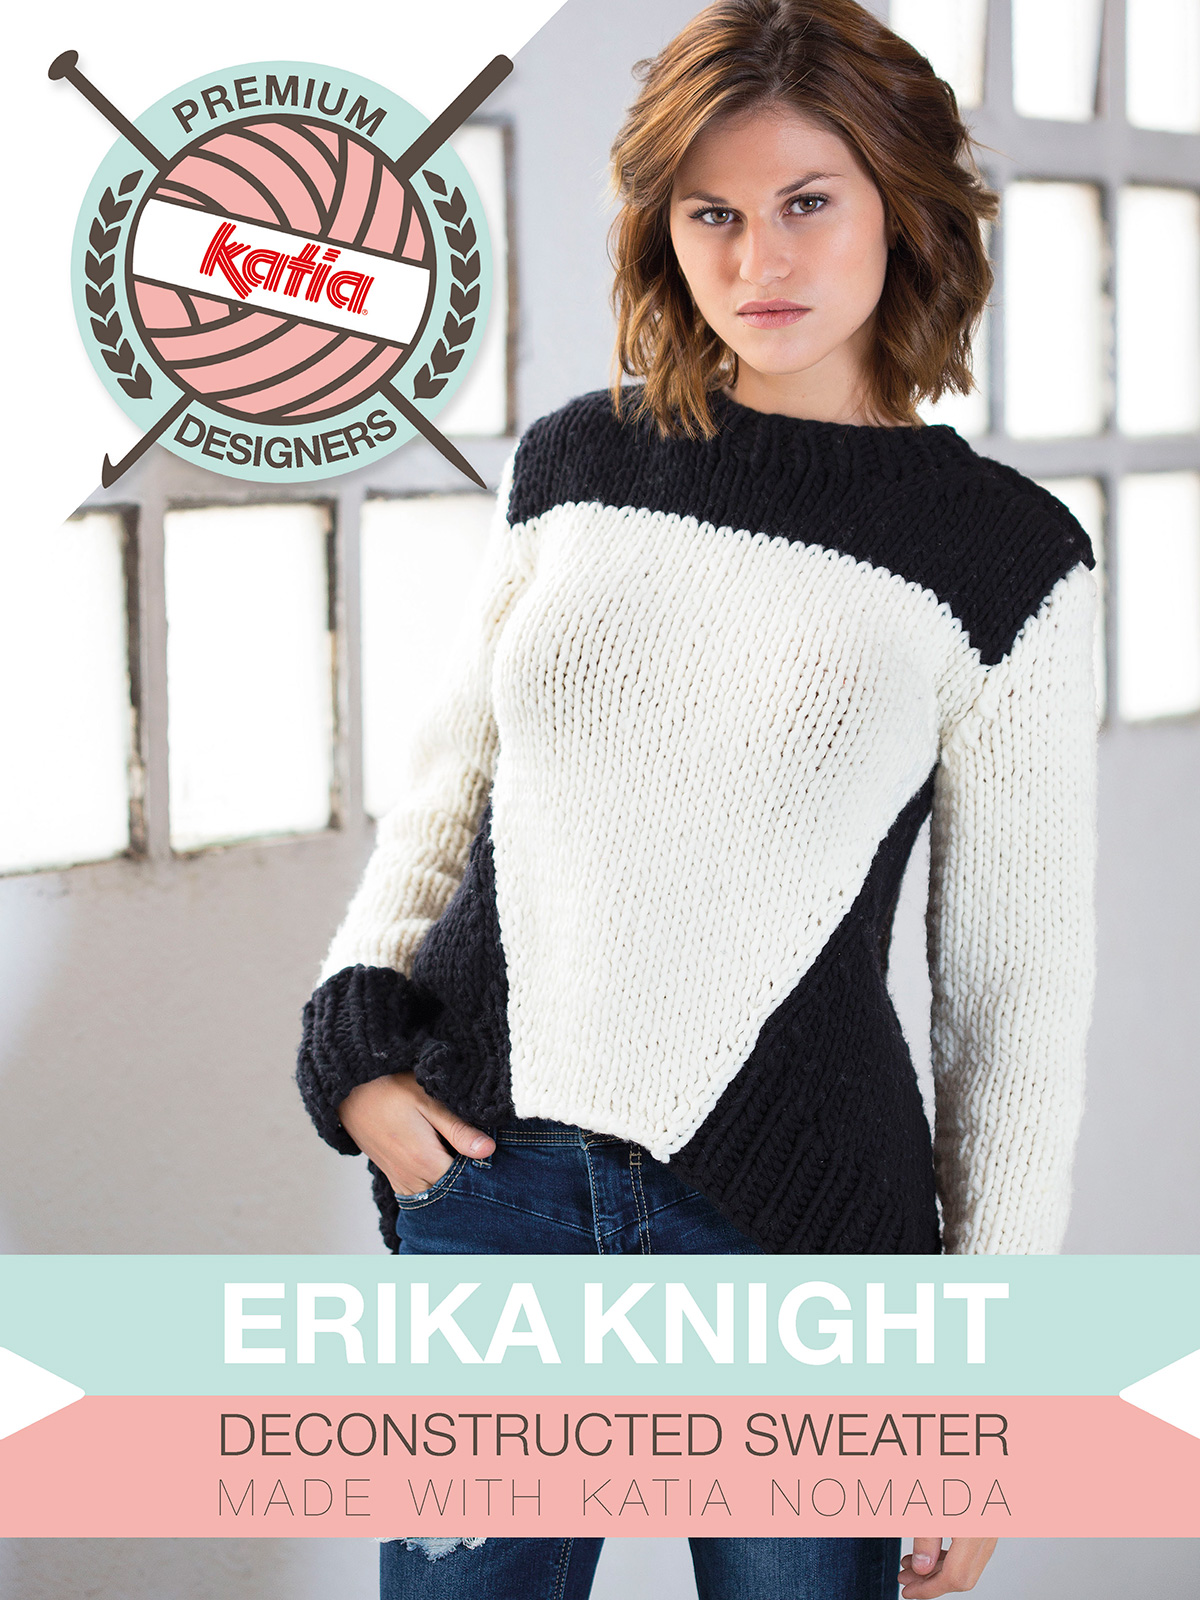 Erika knight instagram